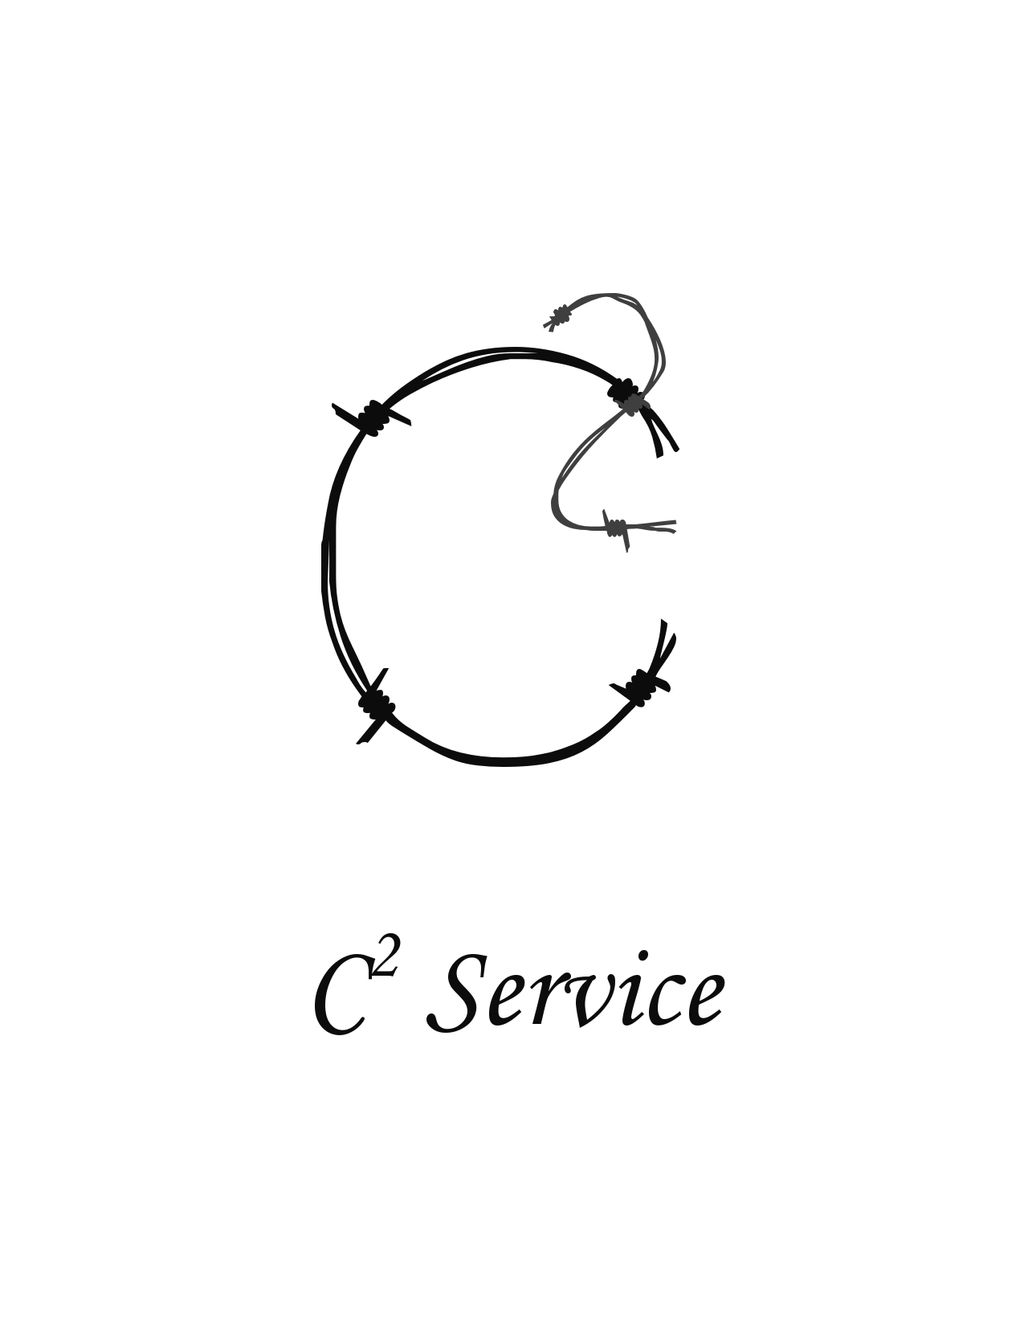 C2 Service